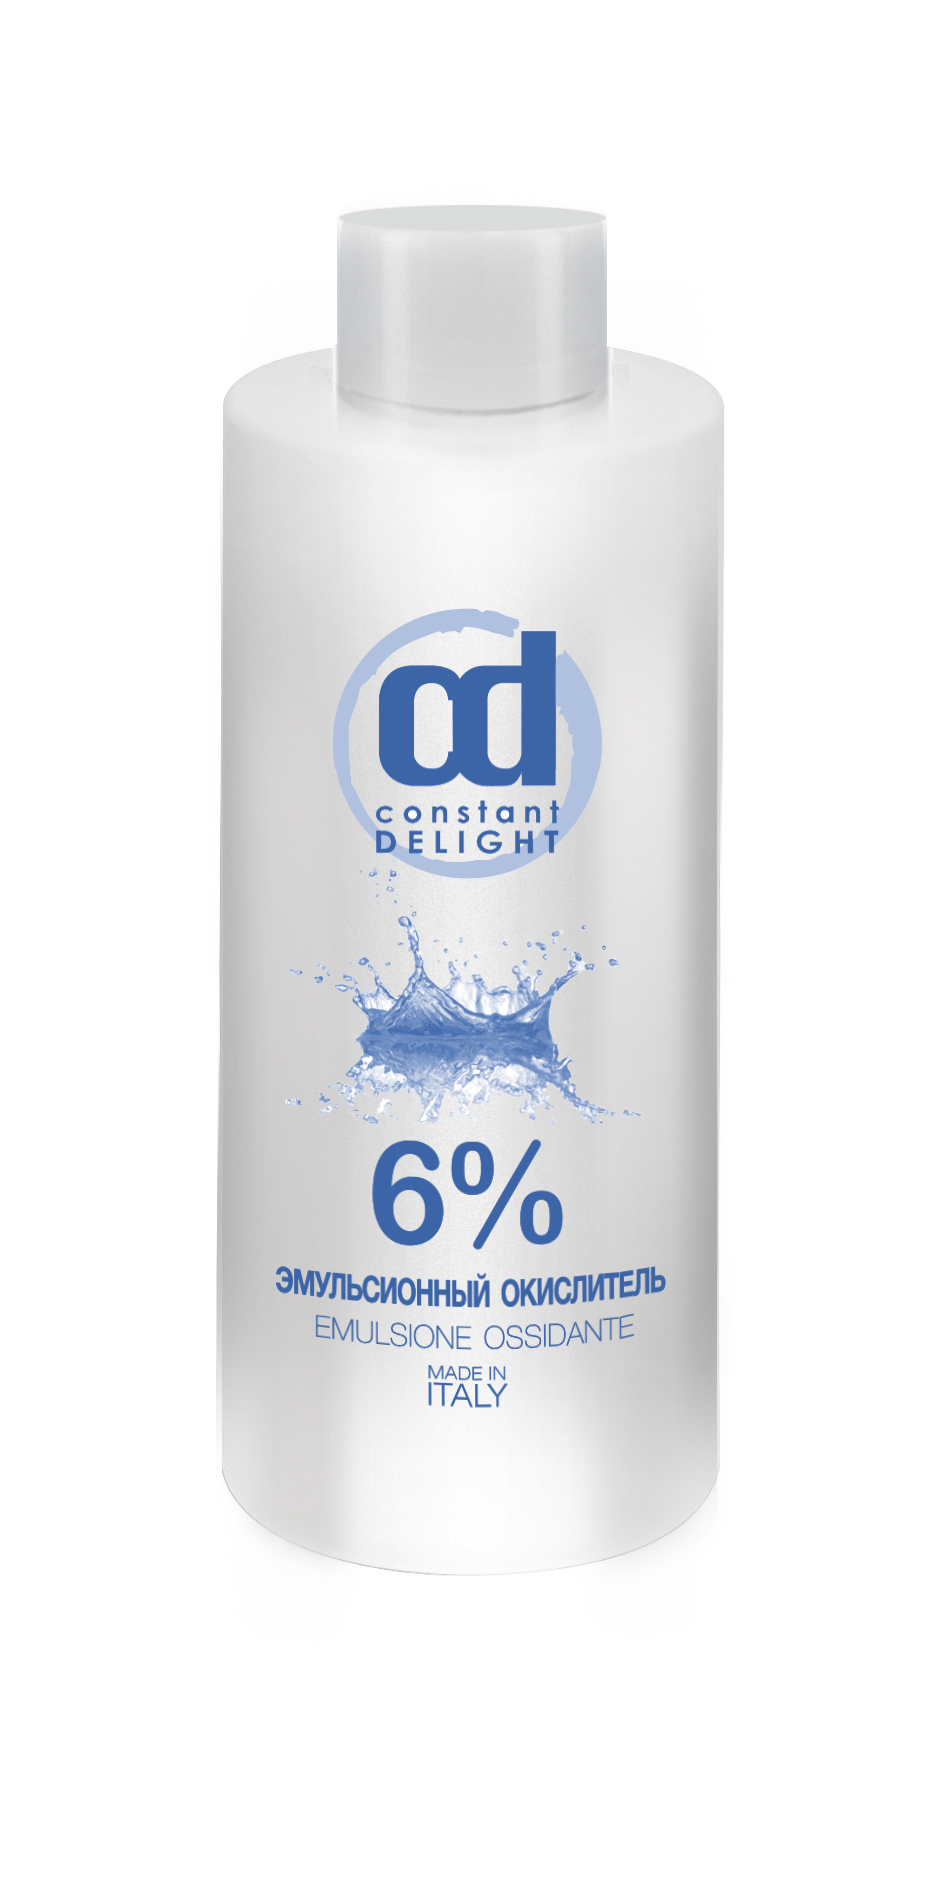 Constant delight эмульсионный окислитель 6% 150 мл